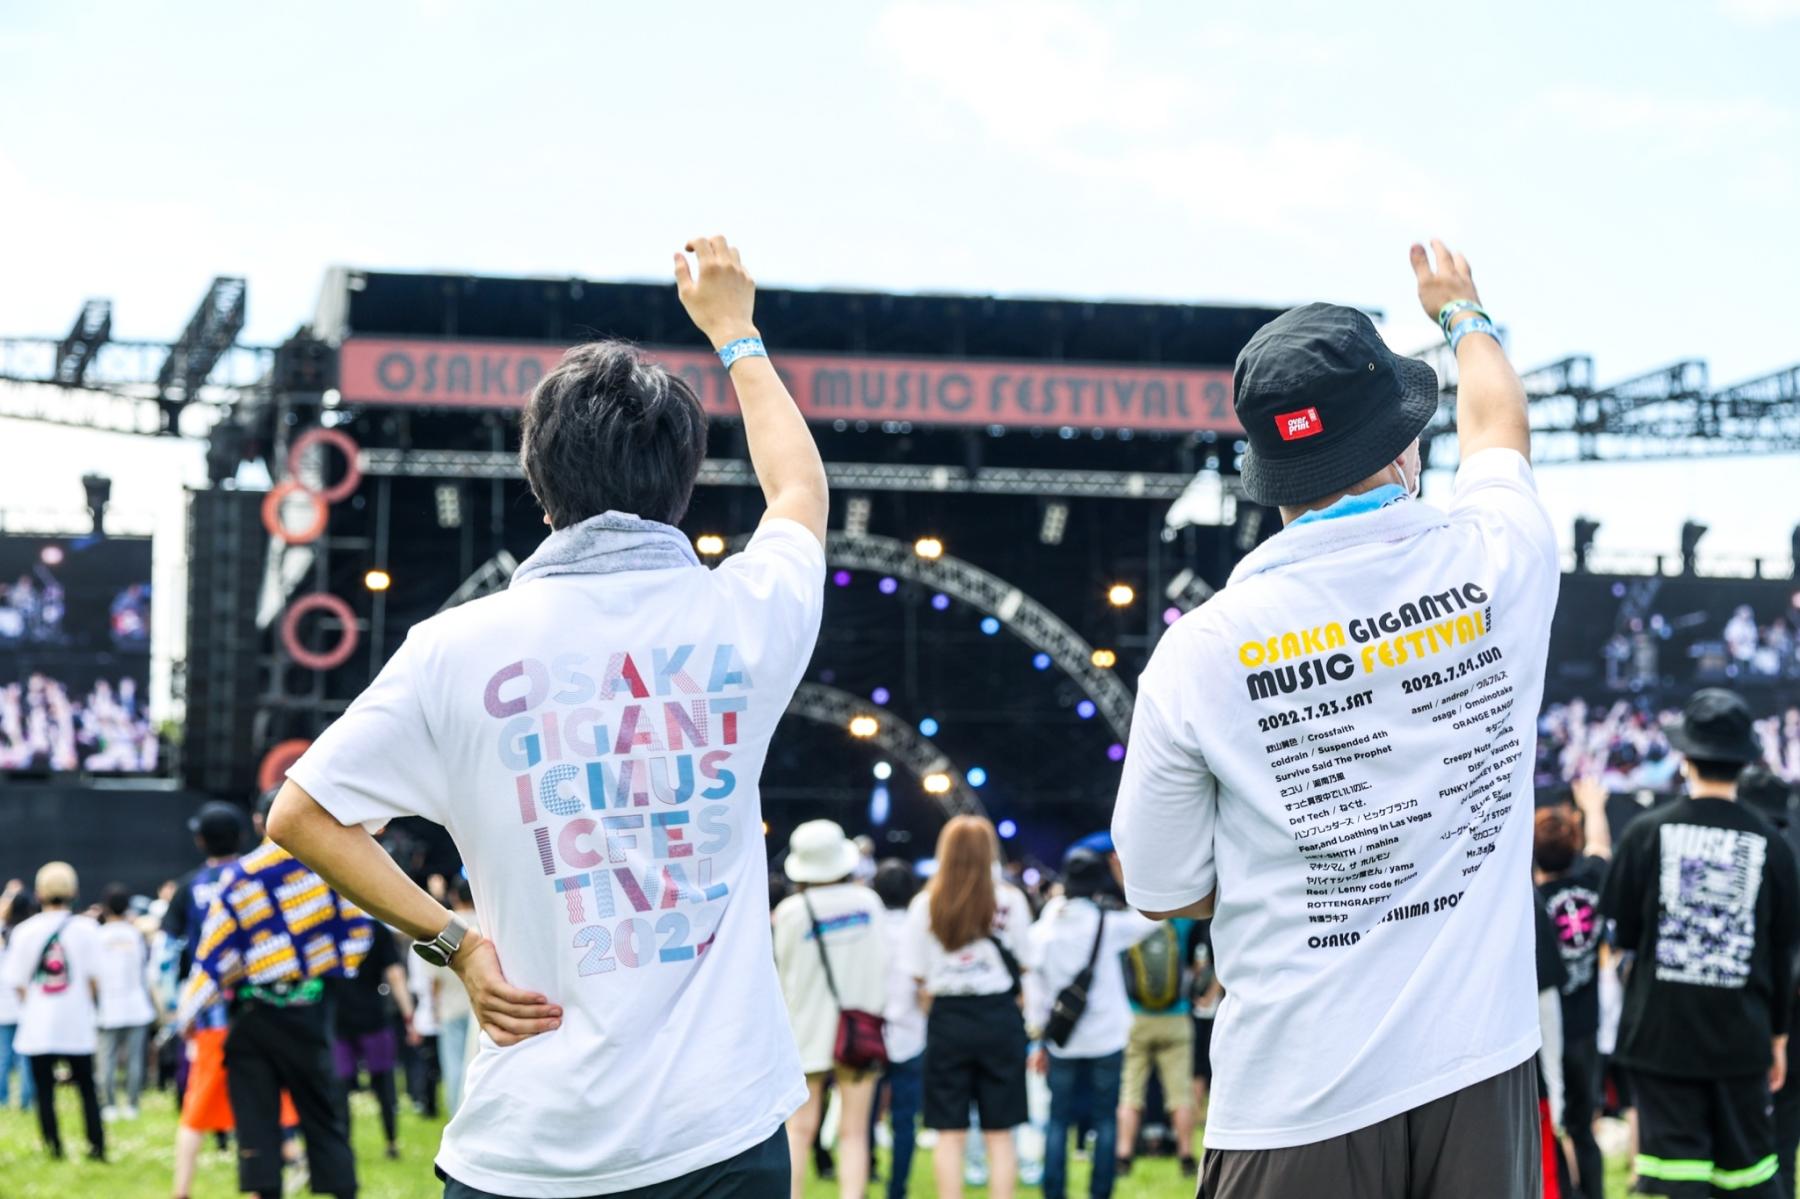 OSAKA GIGANTIC MUSIC FESTIVAL 2022』 イベントレポート | KEP